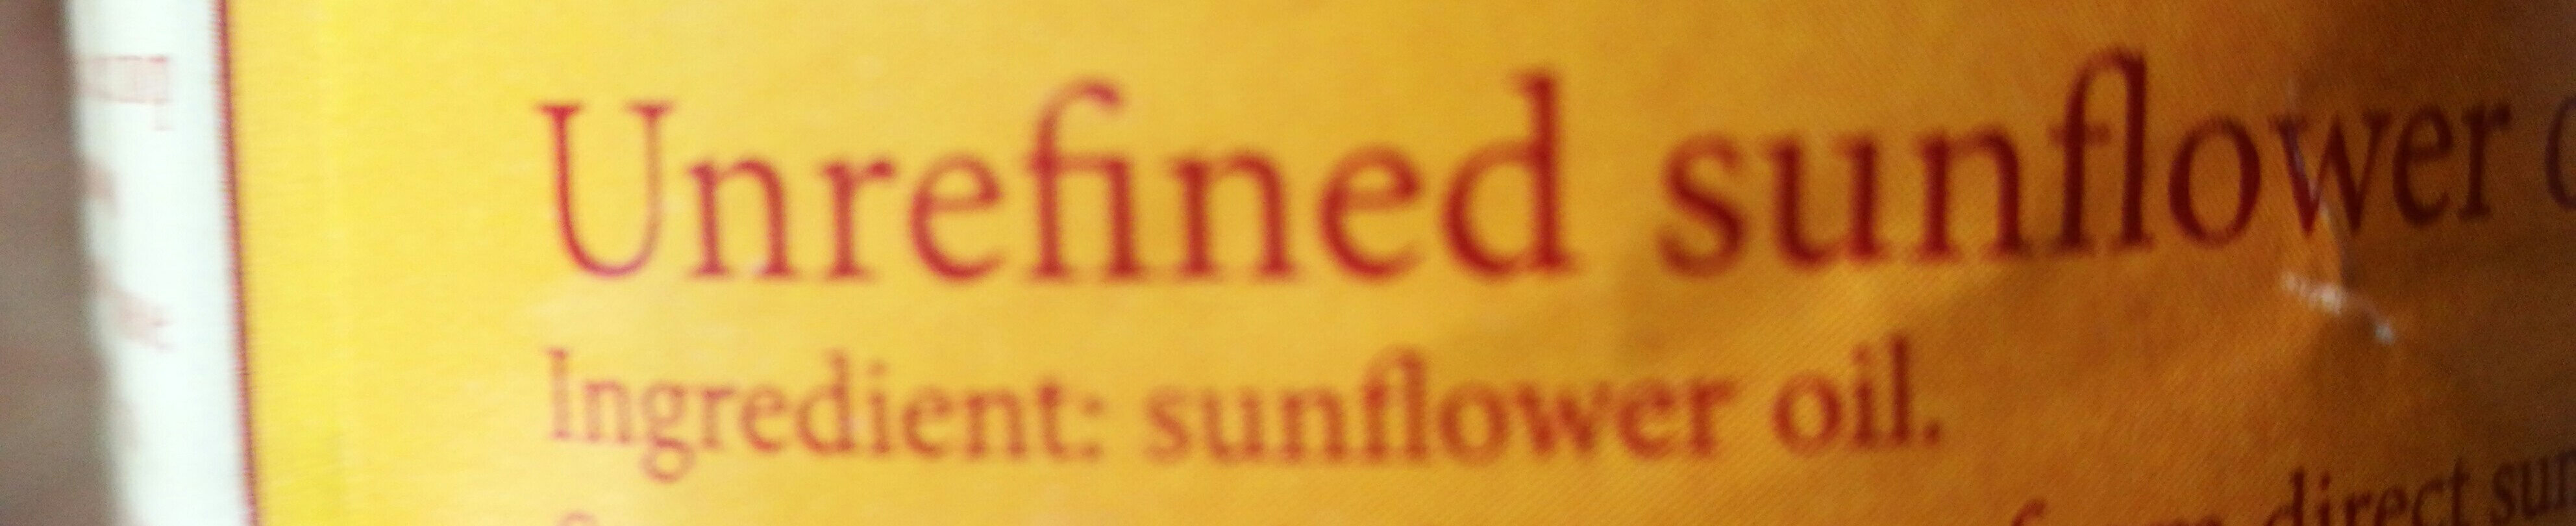 Unrefined sunflower oil - Ingredients